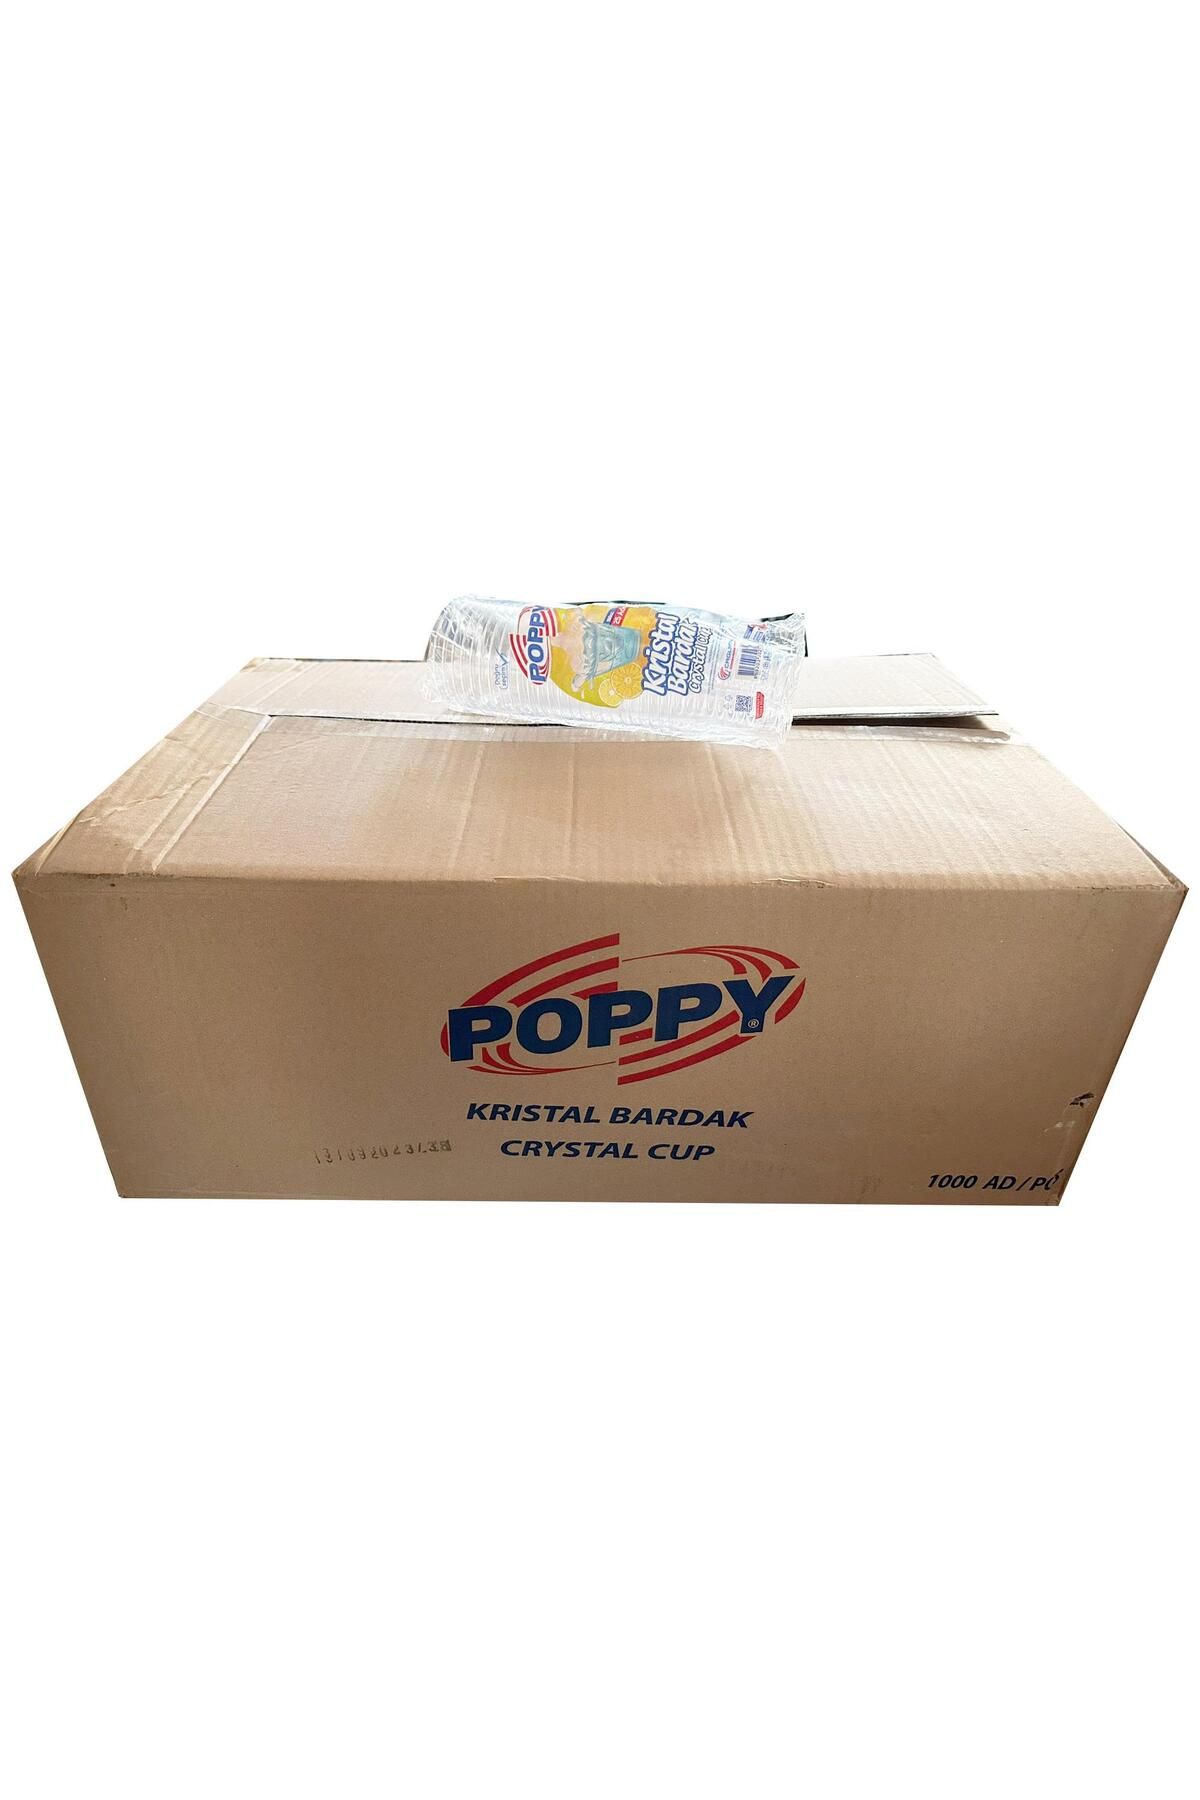 Poppy Şeffaf Plastik Kristal Bardak - 180 Cc. - 180 Ml. - 1000 Adetlik Koli